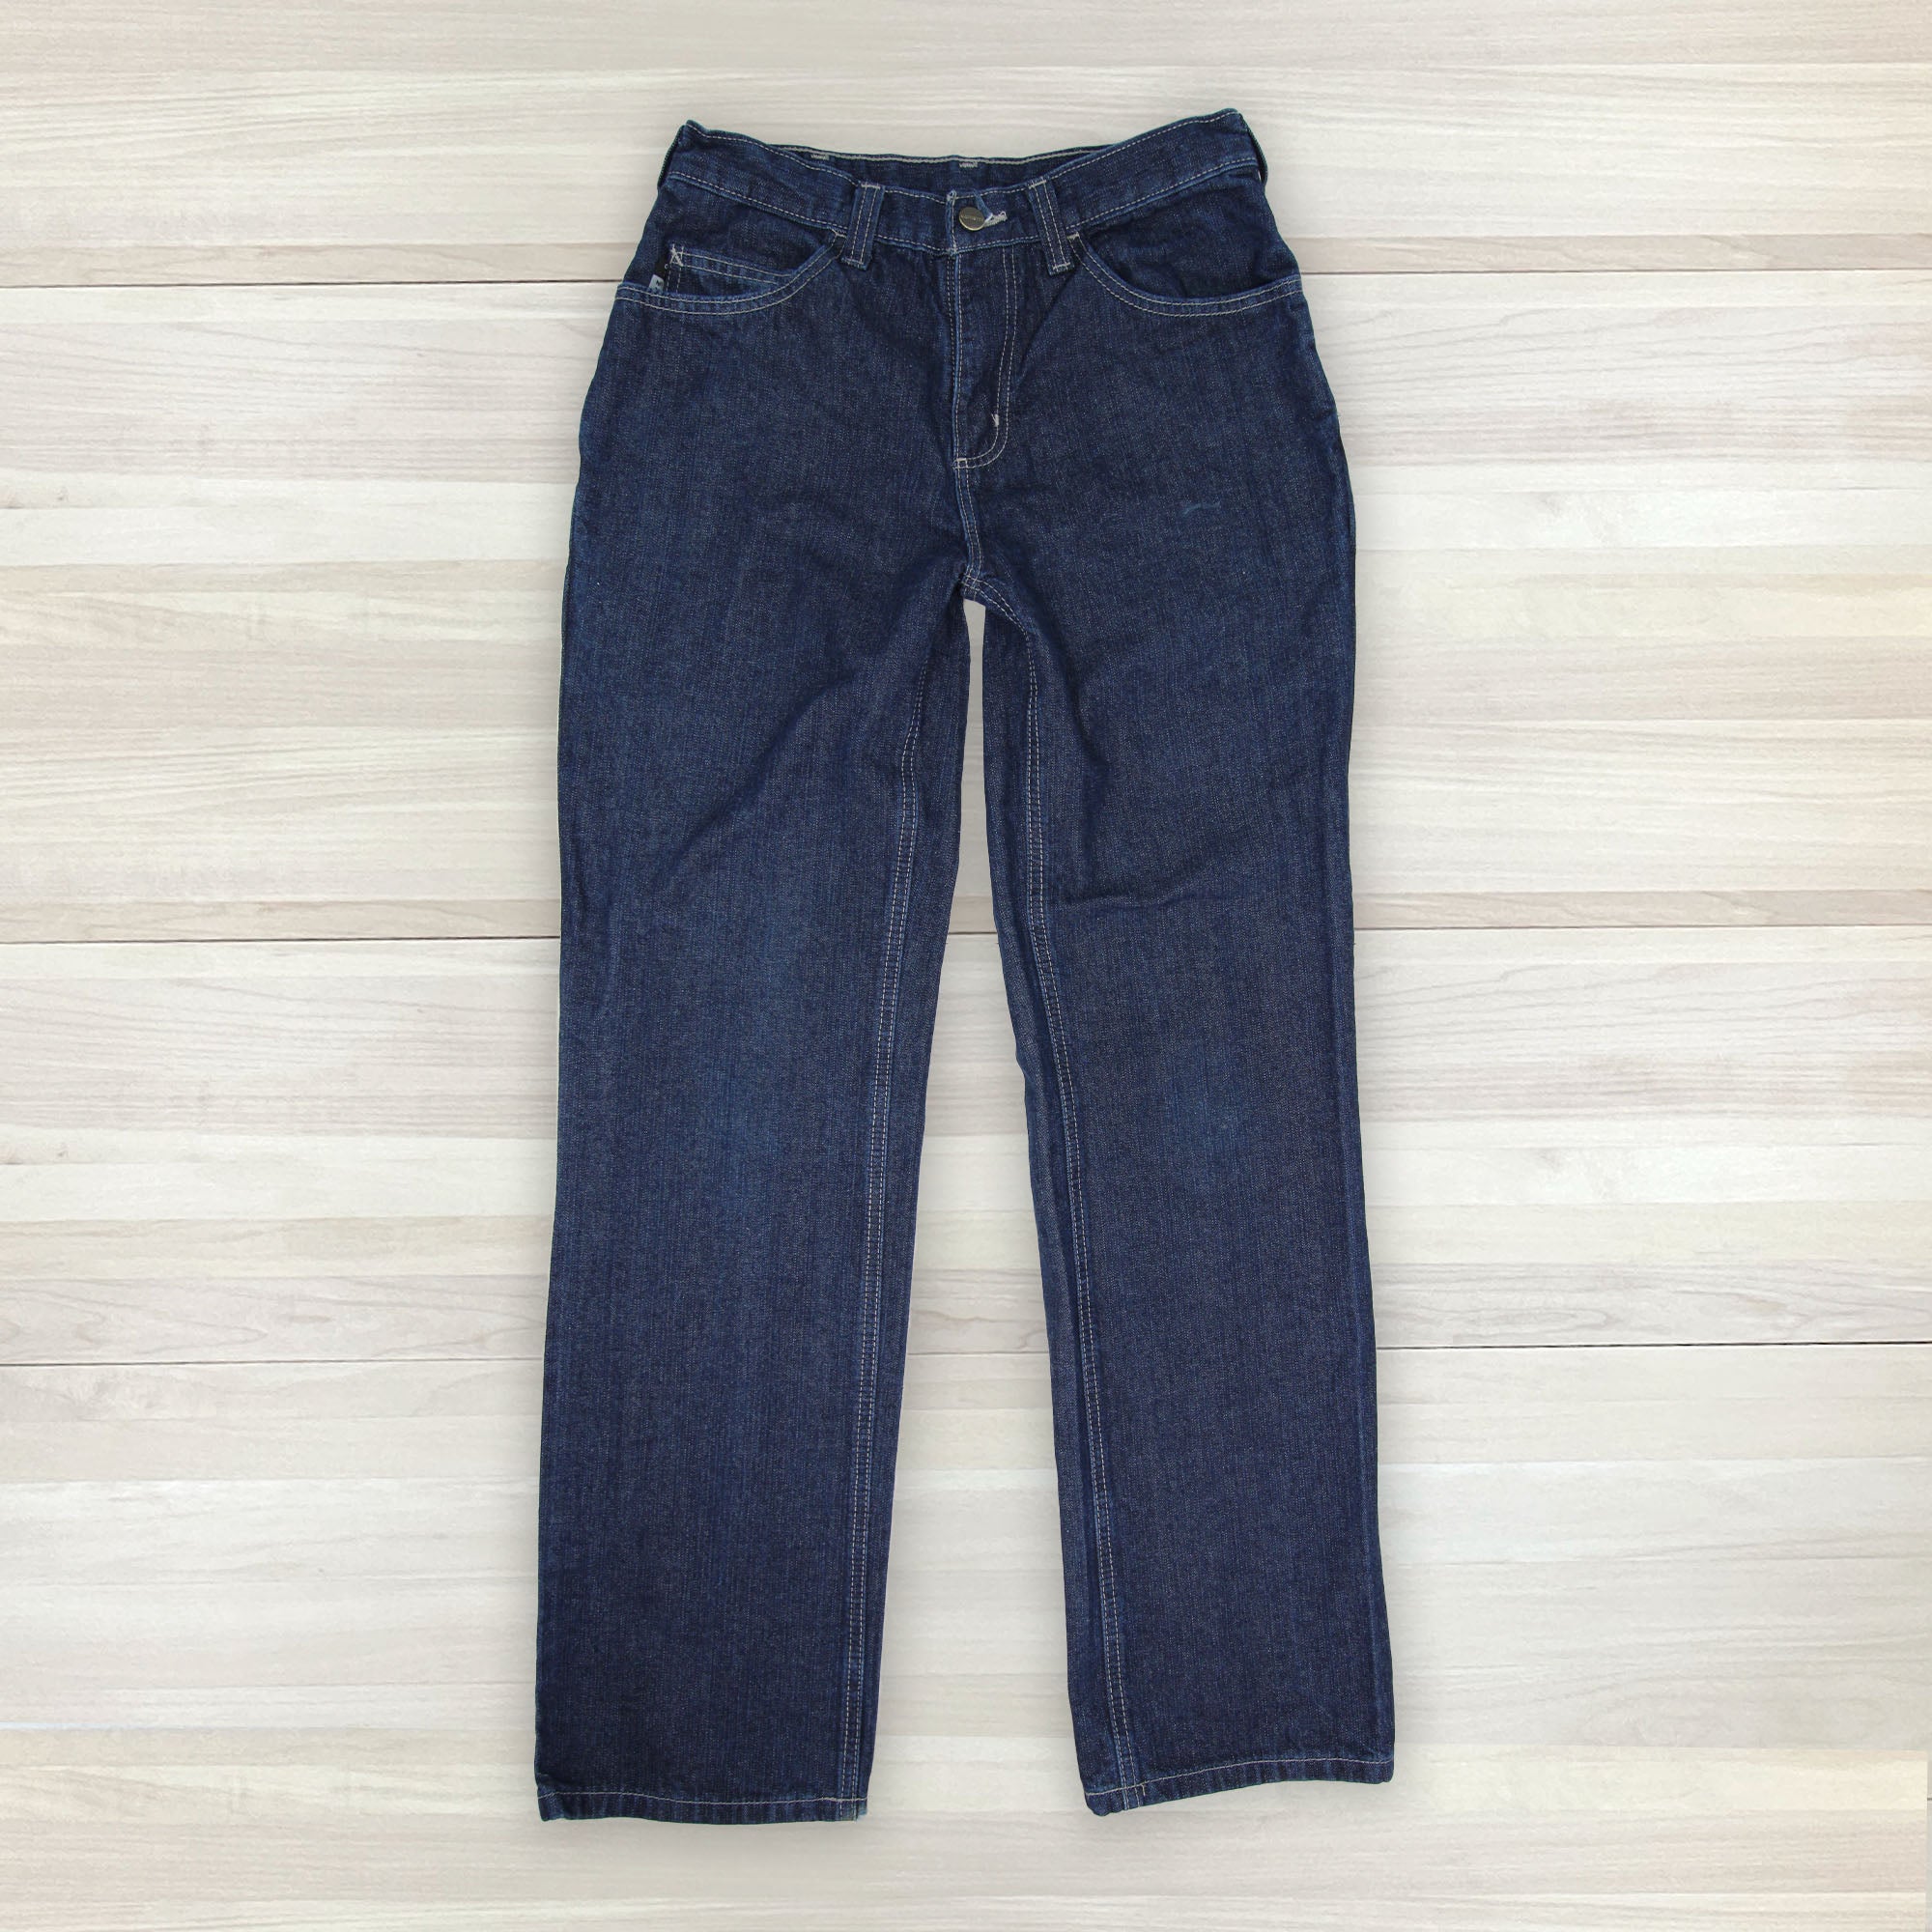 Men's Carhartt FR Flame Resistant Jeans - Measures 28x31-1